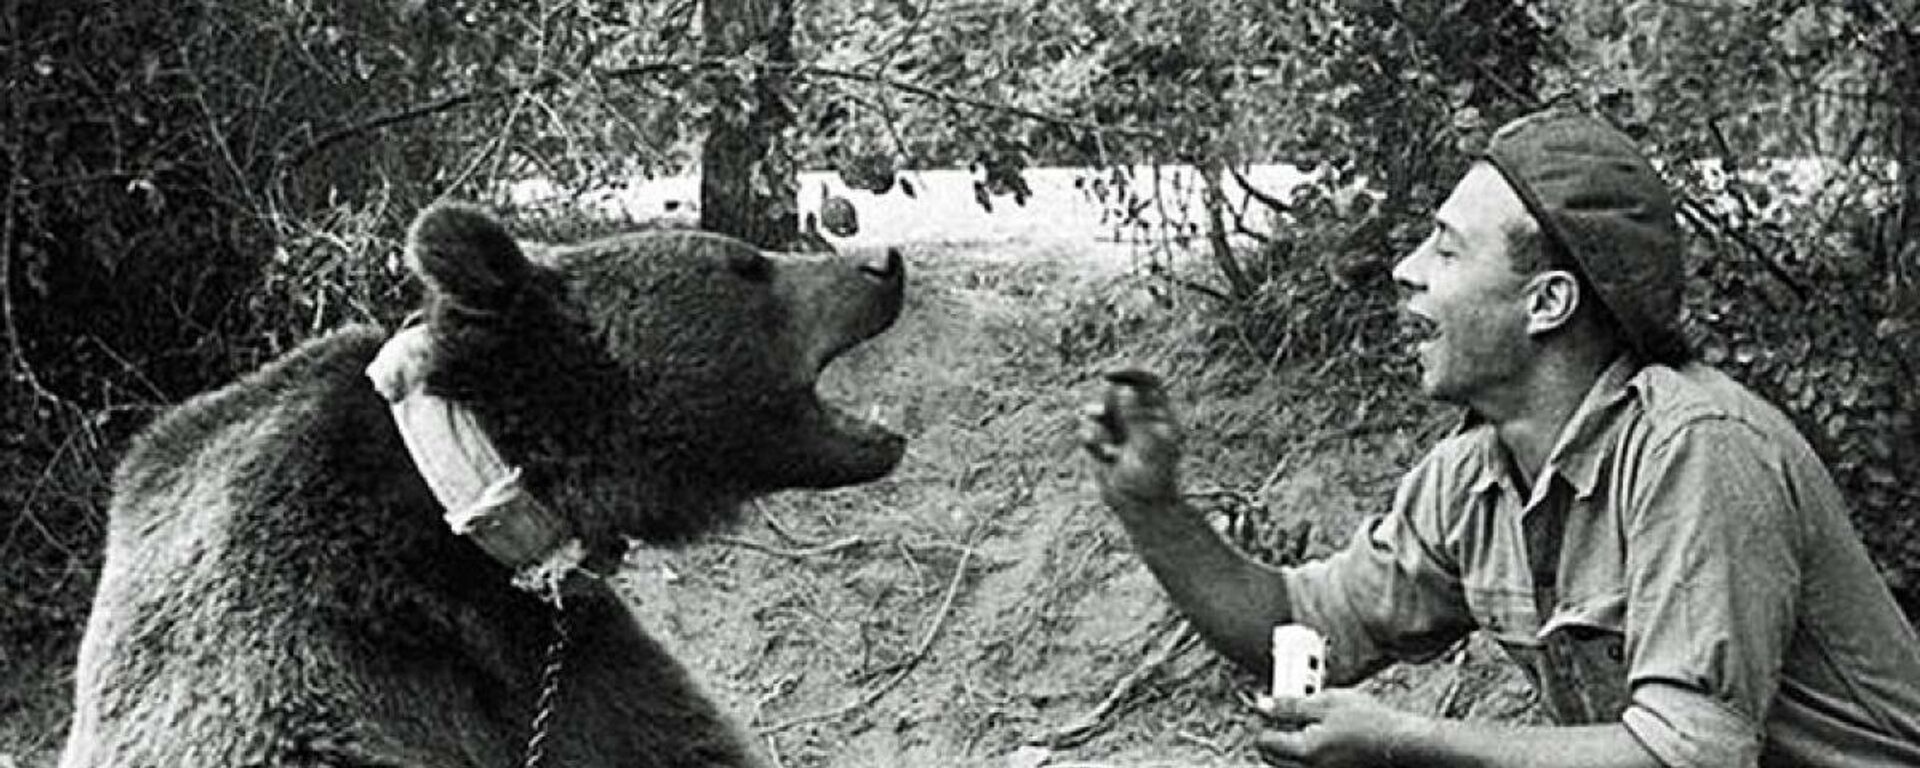 El oso militar del ejército polaco. - Sputnik Mundo, 1920, 31.01.2022